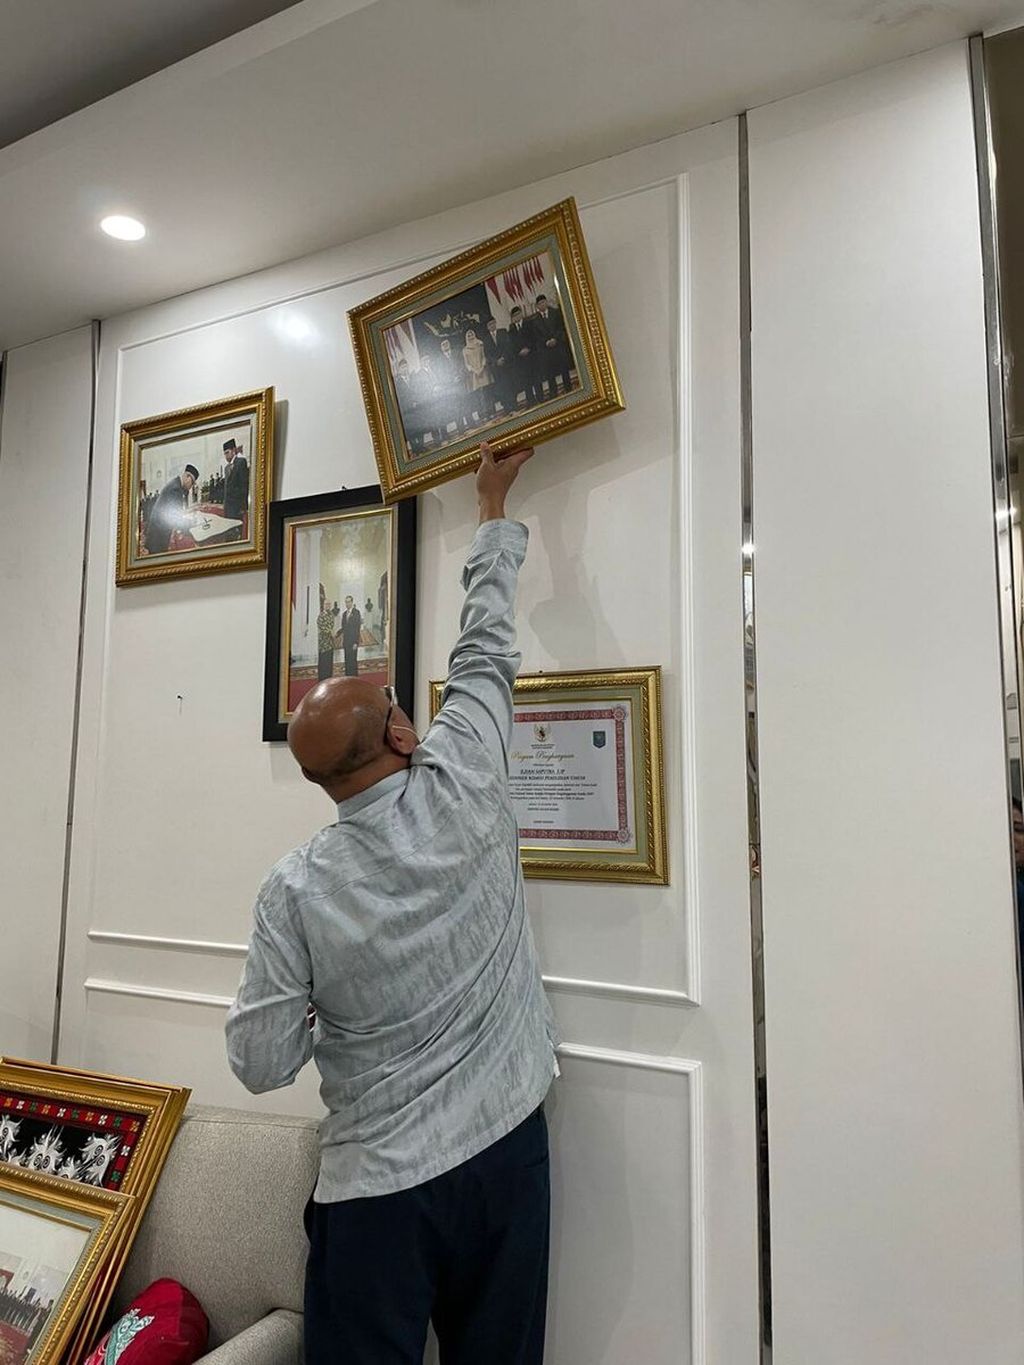 Ketua Komisi Pemilihan Umum (KPU) periode 2017-2022 Ilham Saputra mencopoti foto pribadi, piagam penghargaan, dan hiasan dinding di hari terakhir masa jabatannya, Senin (11/4/2022).